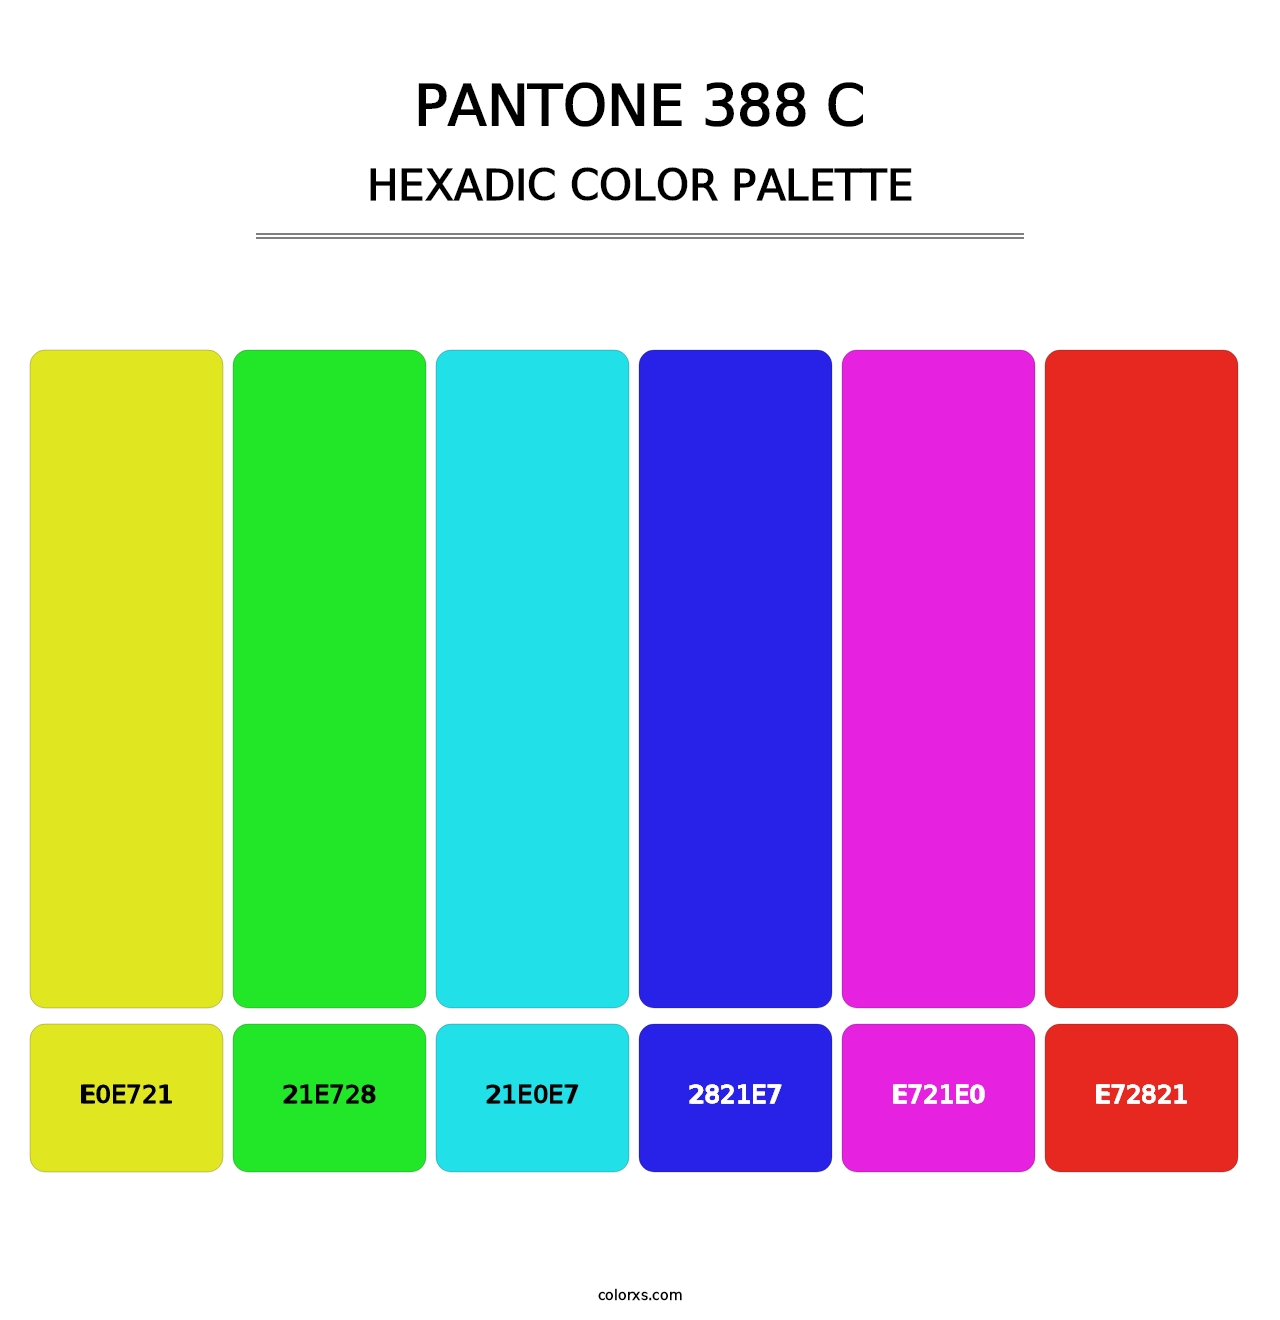 PANTONE 388 C - Hexadic Color Palette